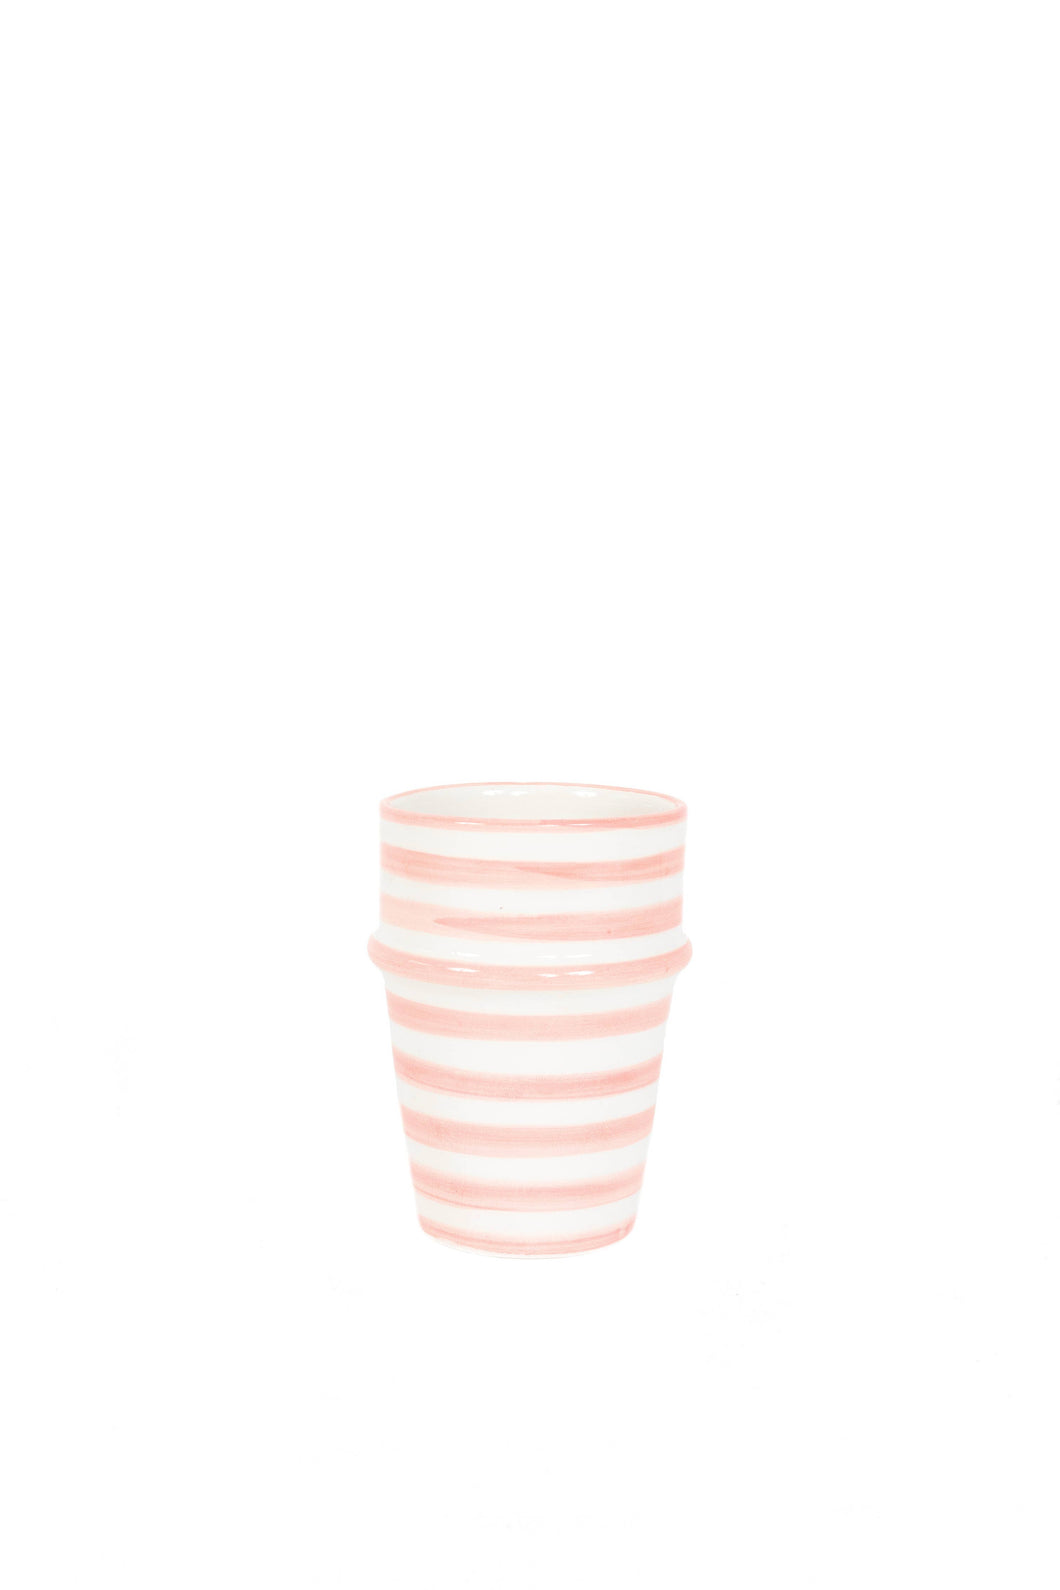 Striped Blush Moroccan Ceramic Cup - Set of 8